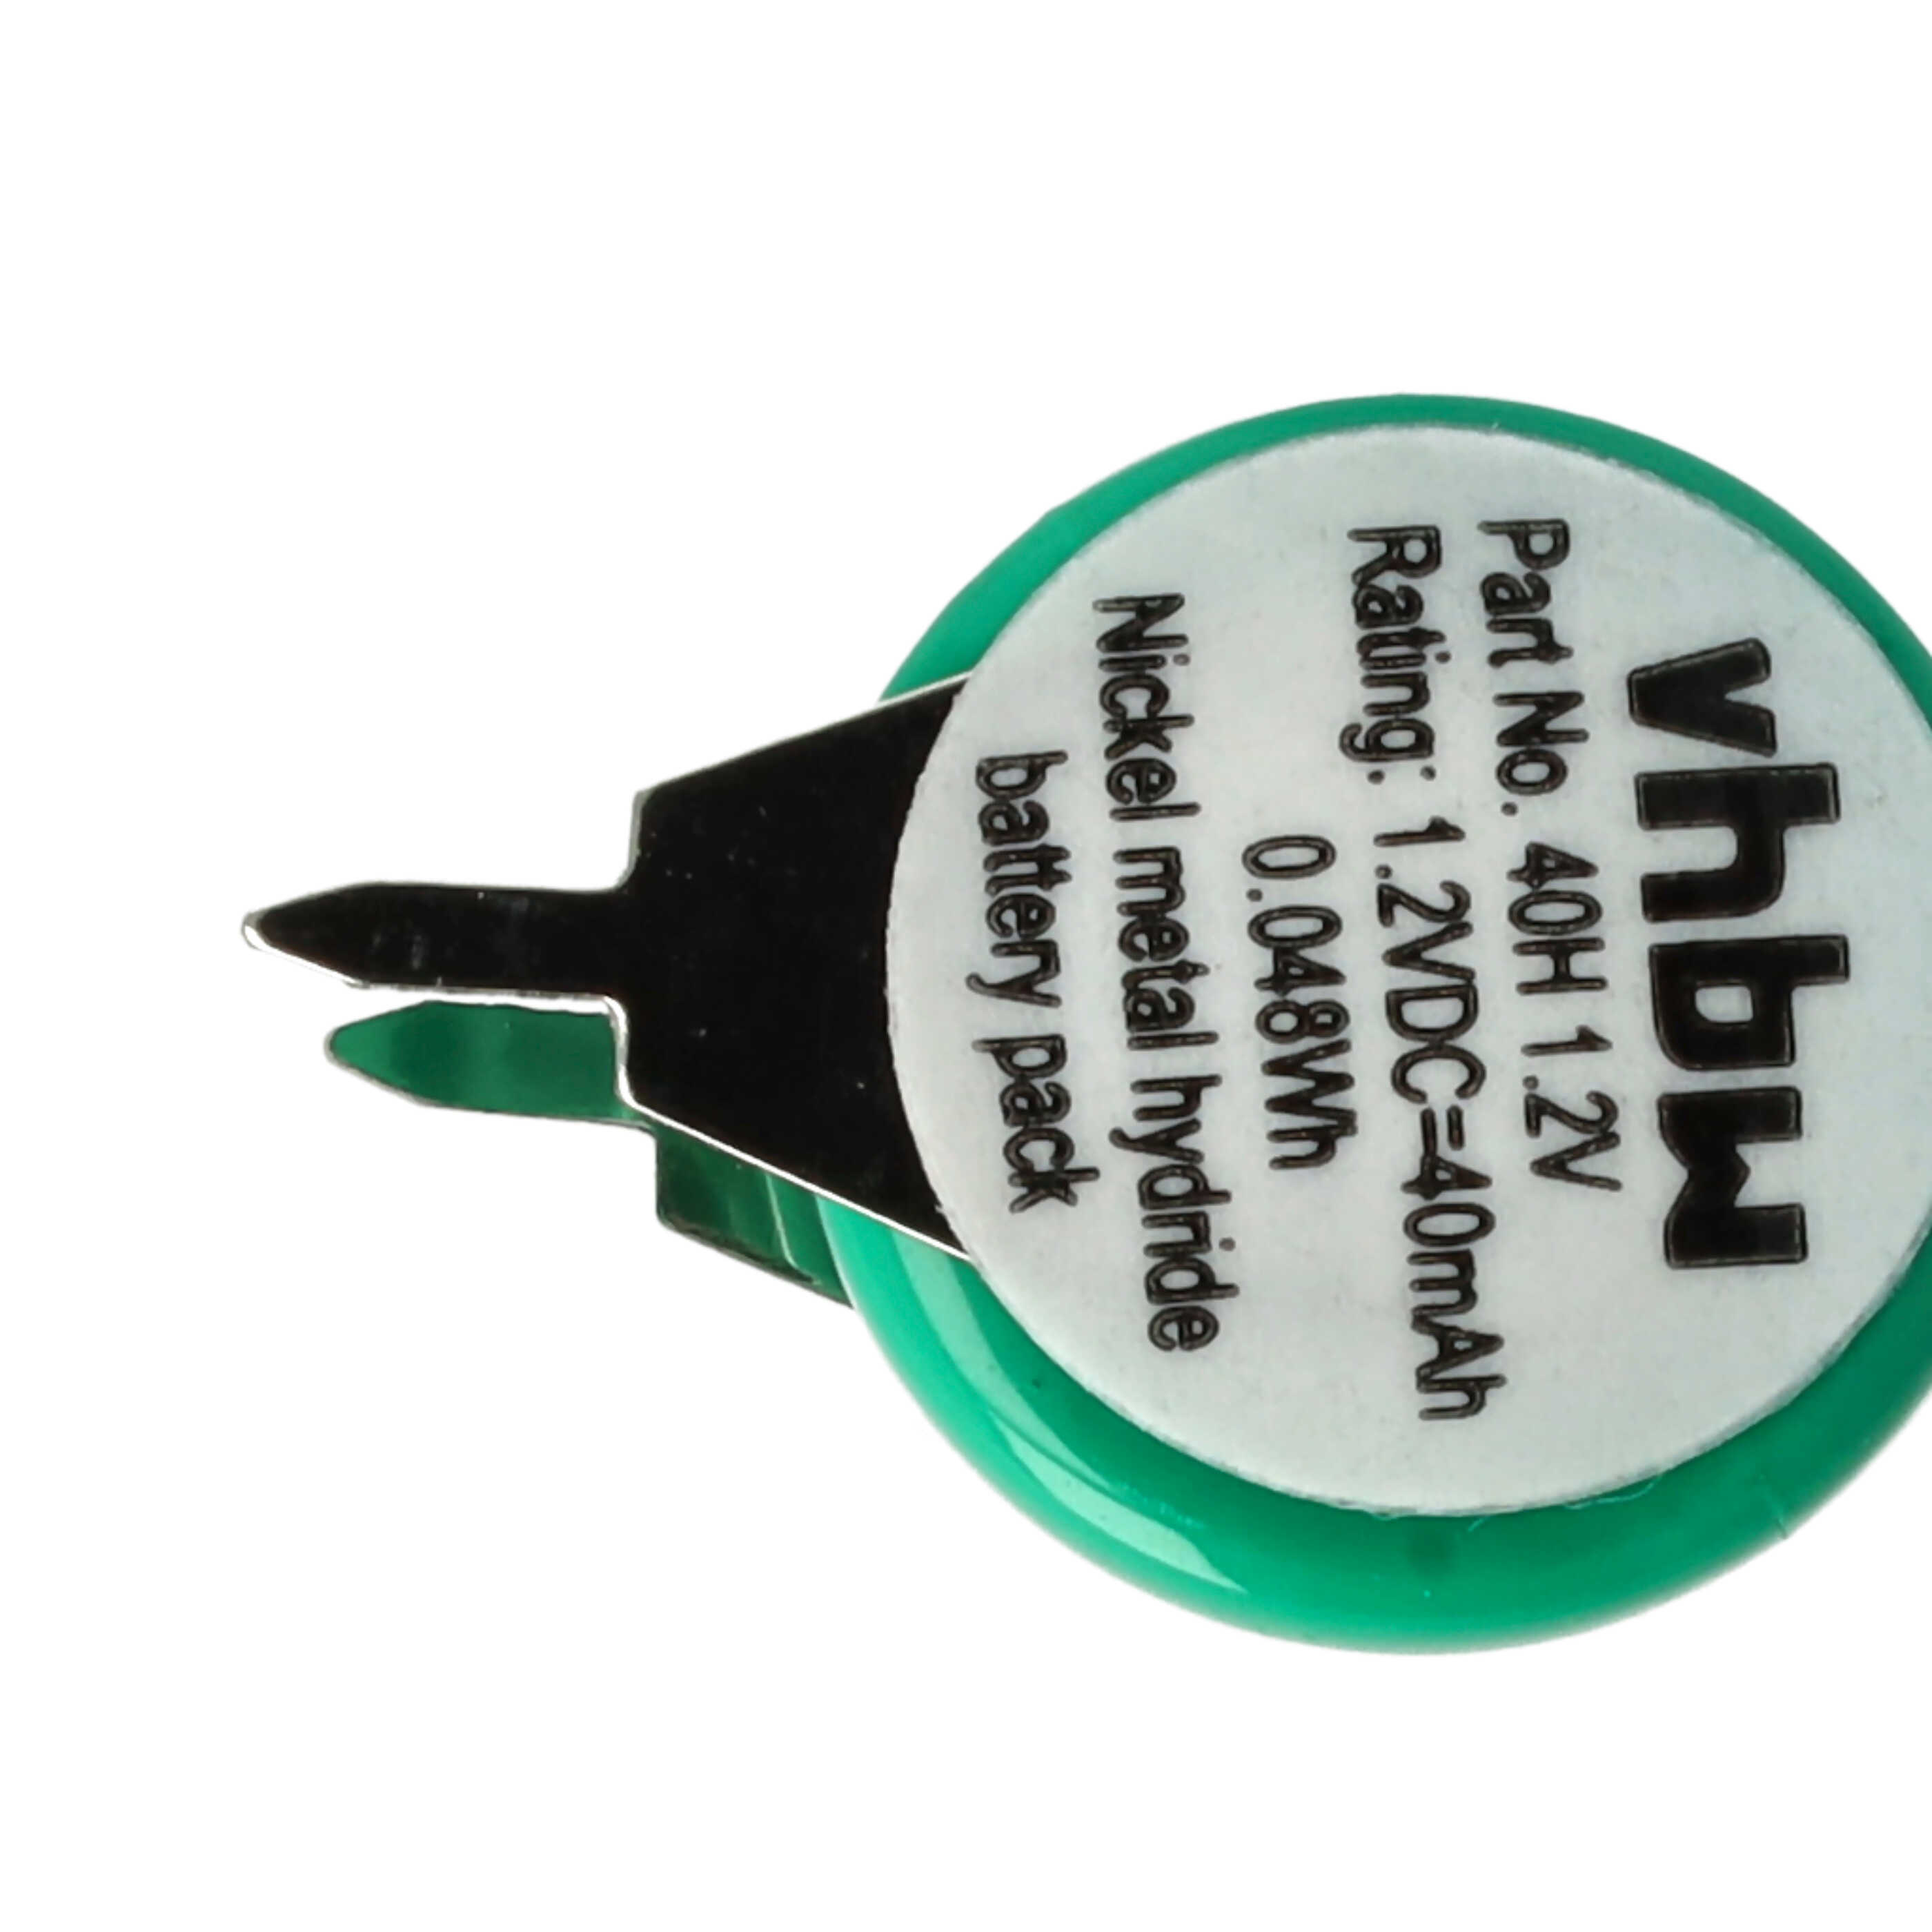 Akumulator guzikowy (1x ogniwo) typ 1/V40H 2 pin do modeli, lamp solarnych itp. - 40 mAh, 1,2 V, NiMH